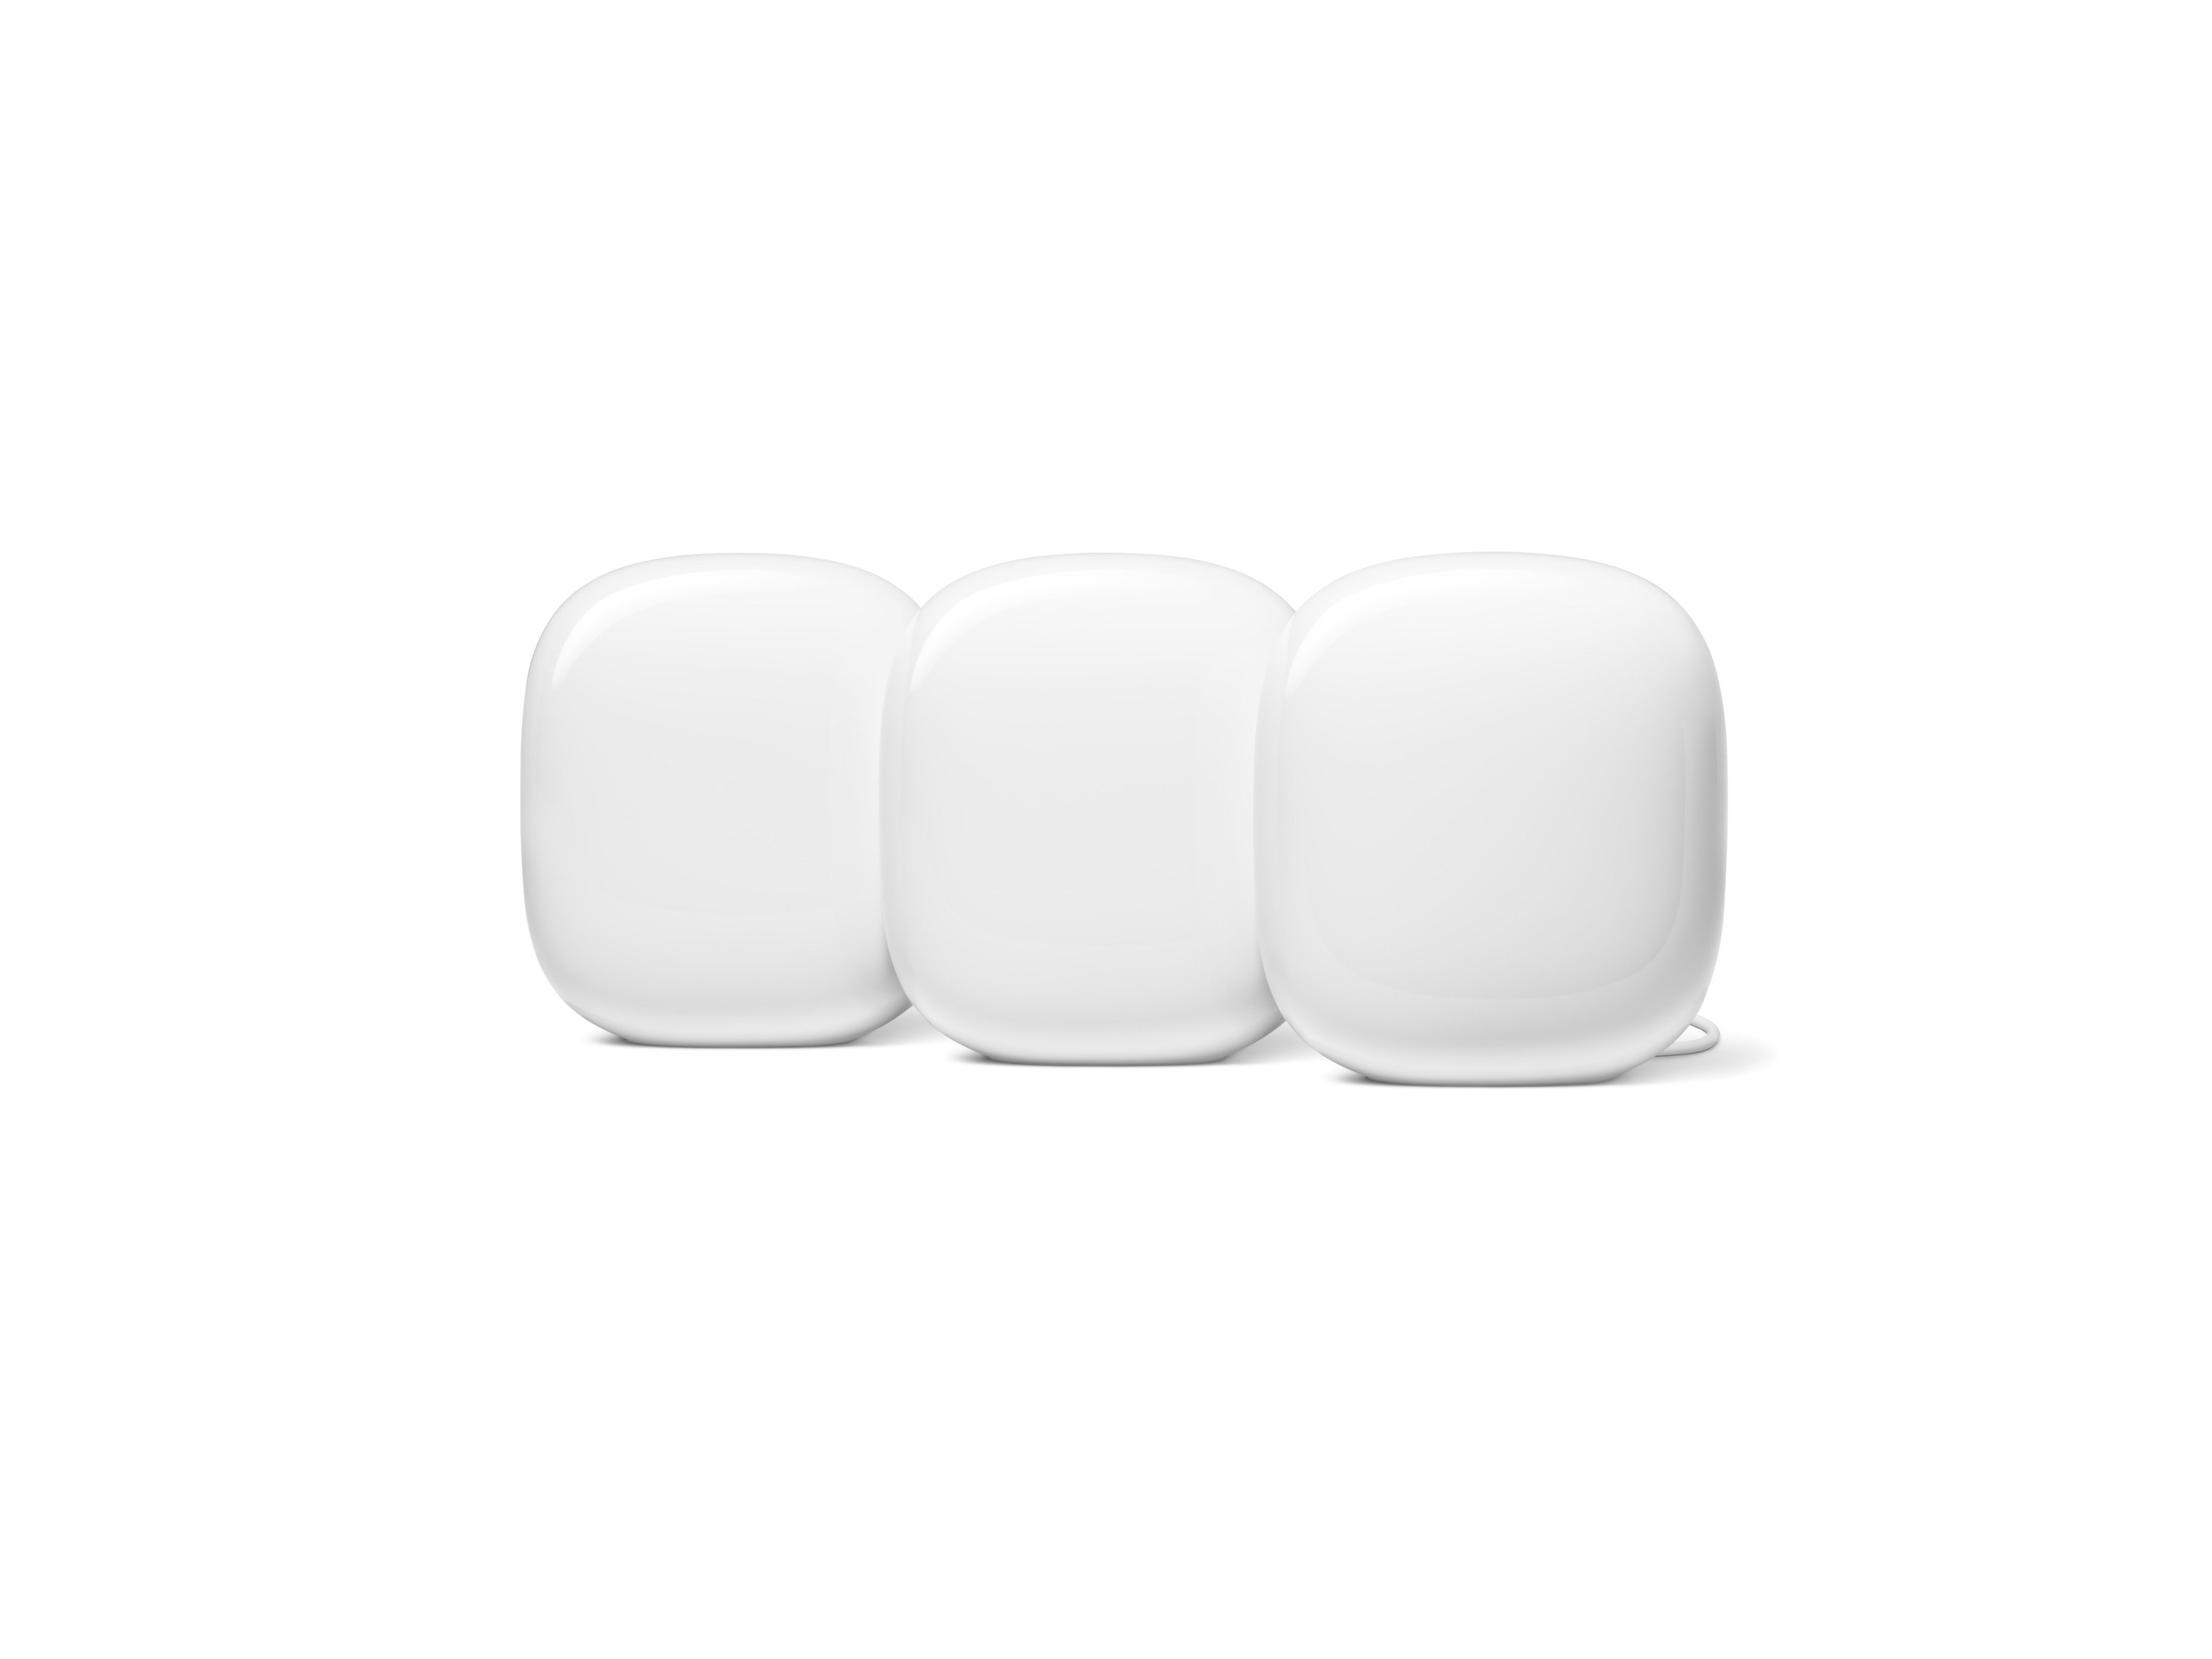 Google - Nest WiFi Pro - 3 pack